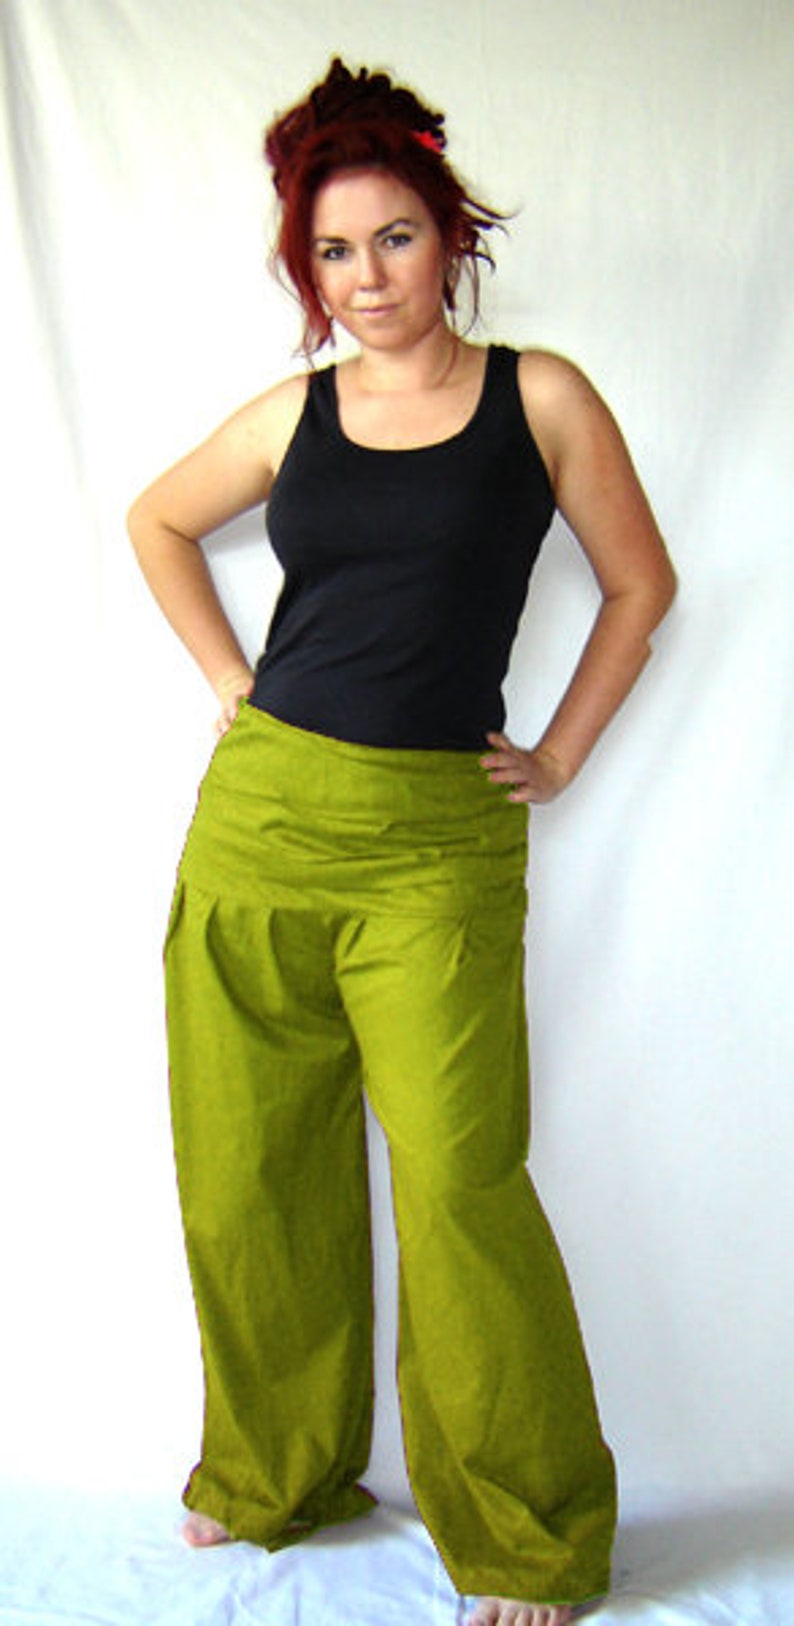 Pleated pants EXTRA LONG wide waistband olive green kissagato pants pump pants S M L XL image 2